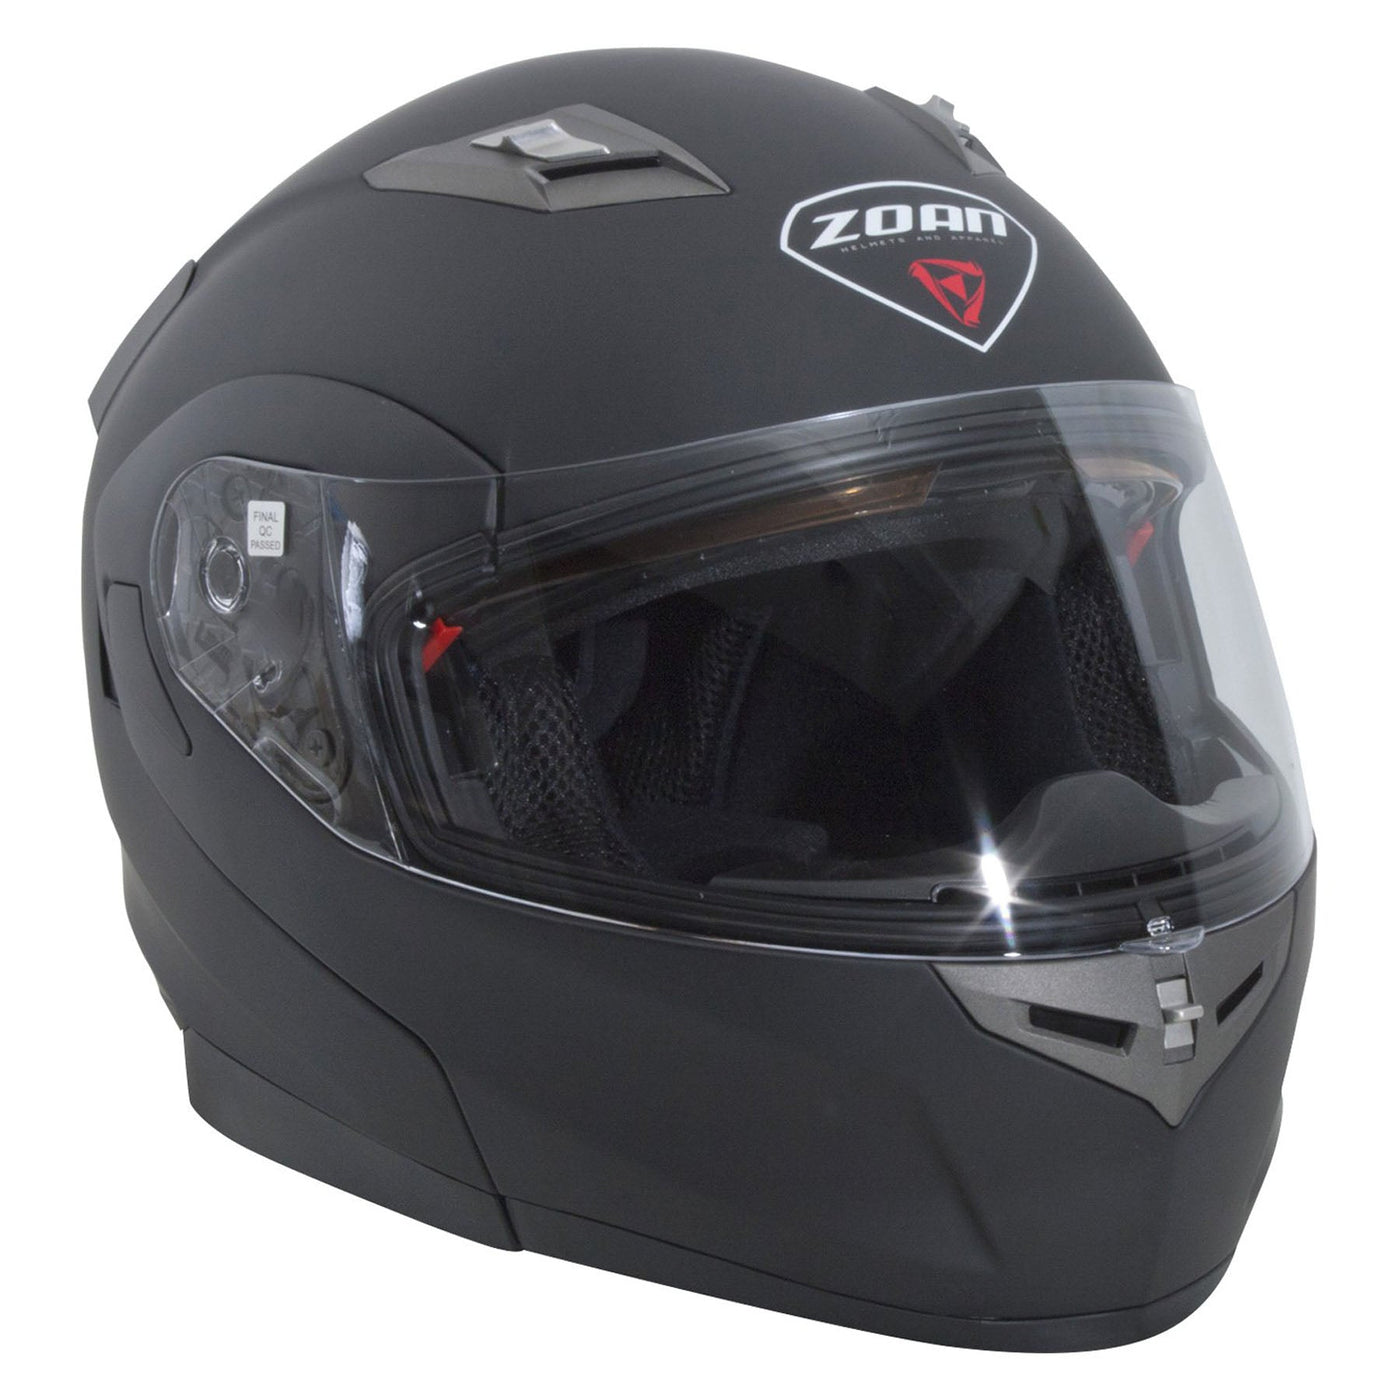 Zoan 037-264 Flux 4.1 Double Lens Snow Helmet - Matte Black - Small #037-264